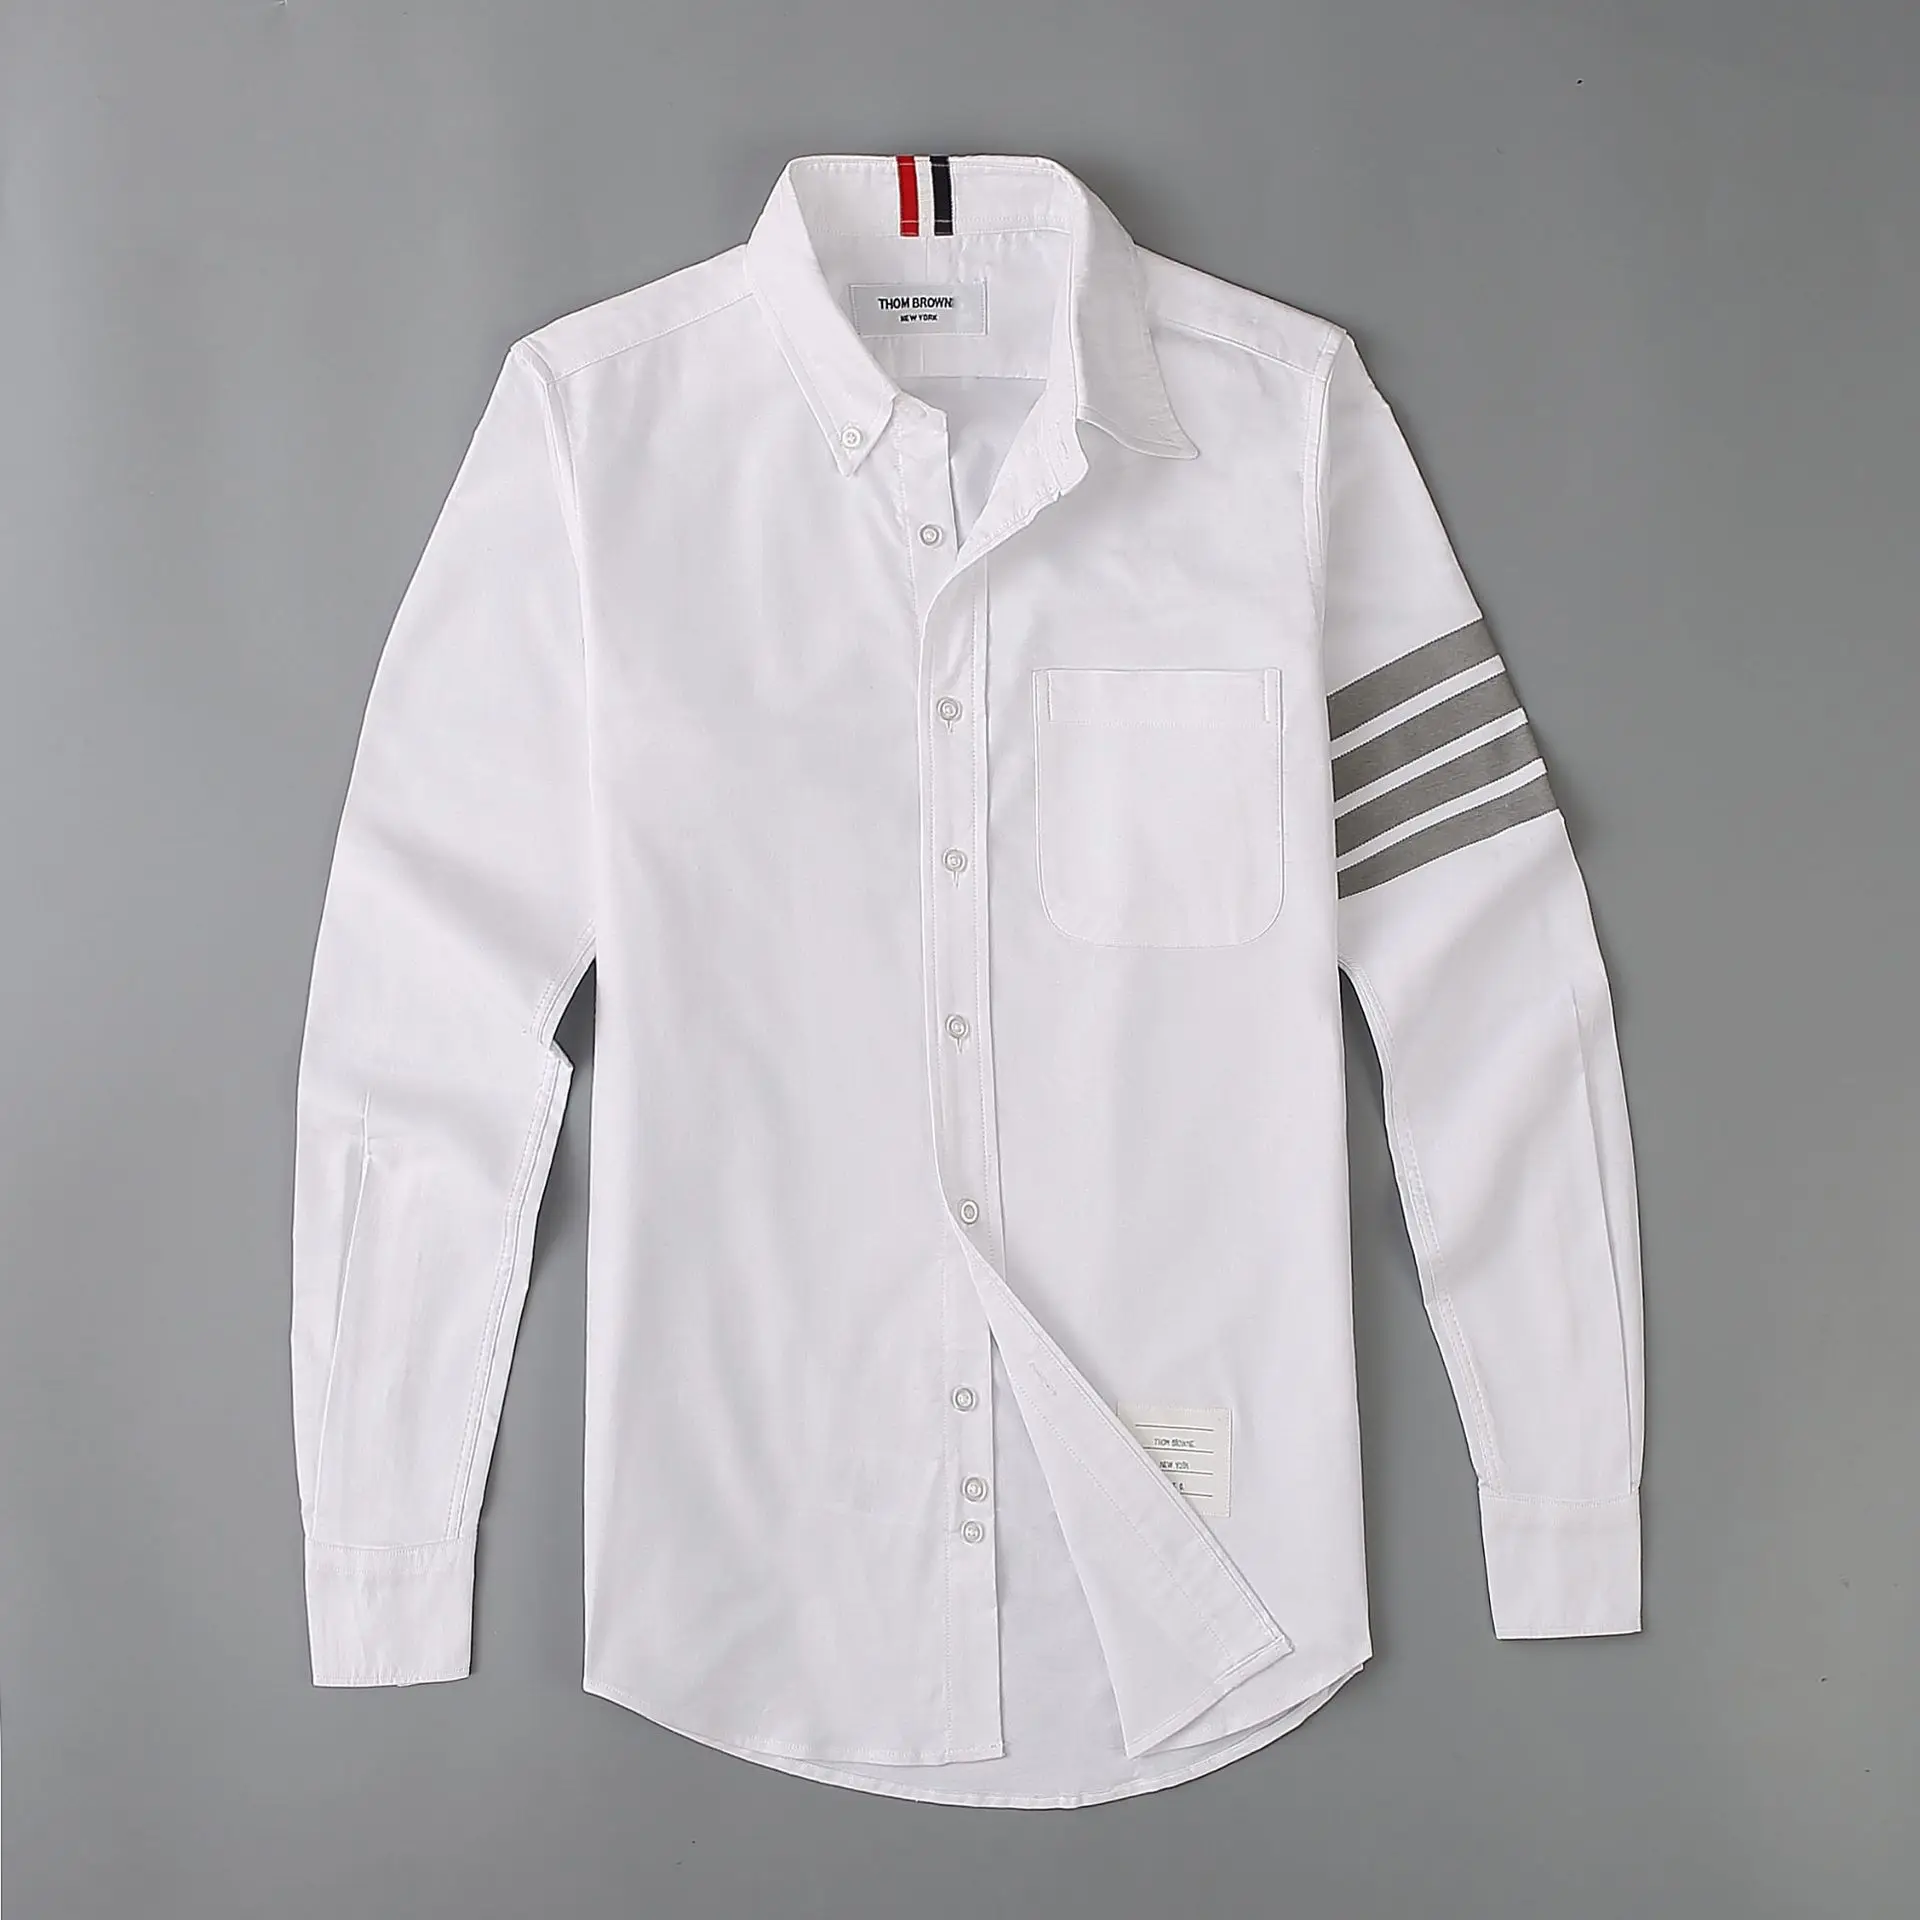 New TB shirt Fashionable brand shirt Oxford spinning single sleeve grey stripe white shirt casual long sleeve shirt